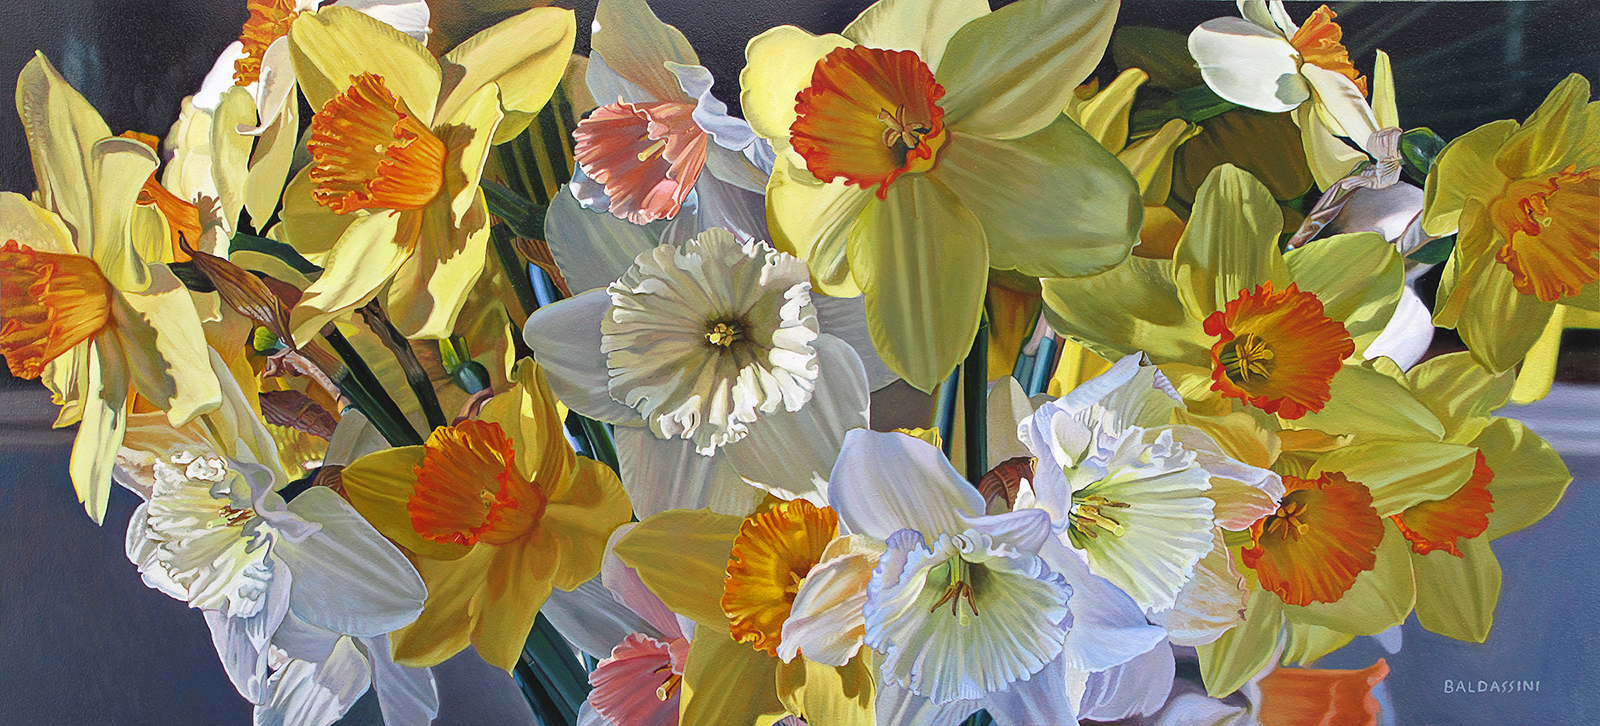 baldassini-floral-flower-garden-oil-painting-daffodils